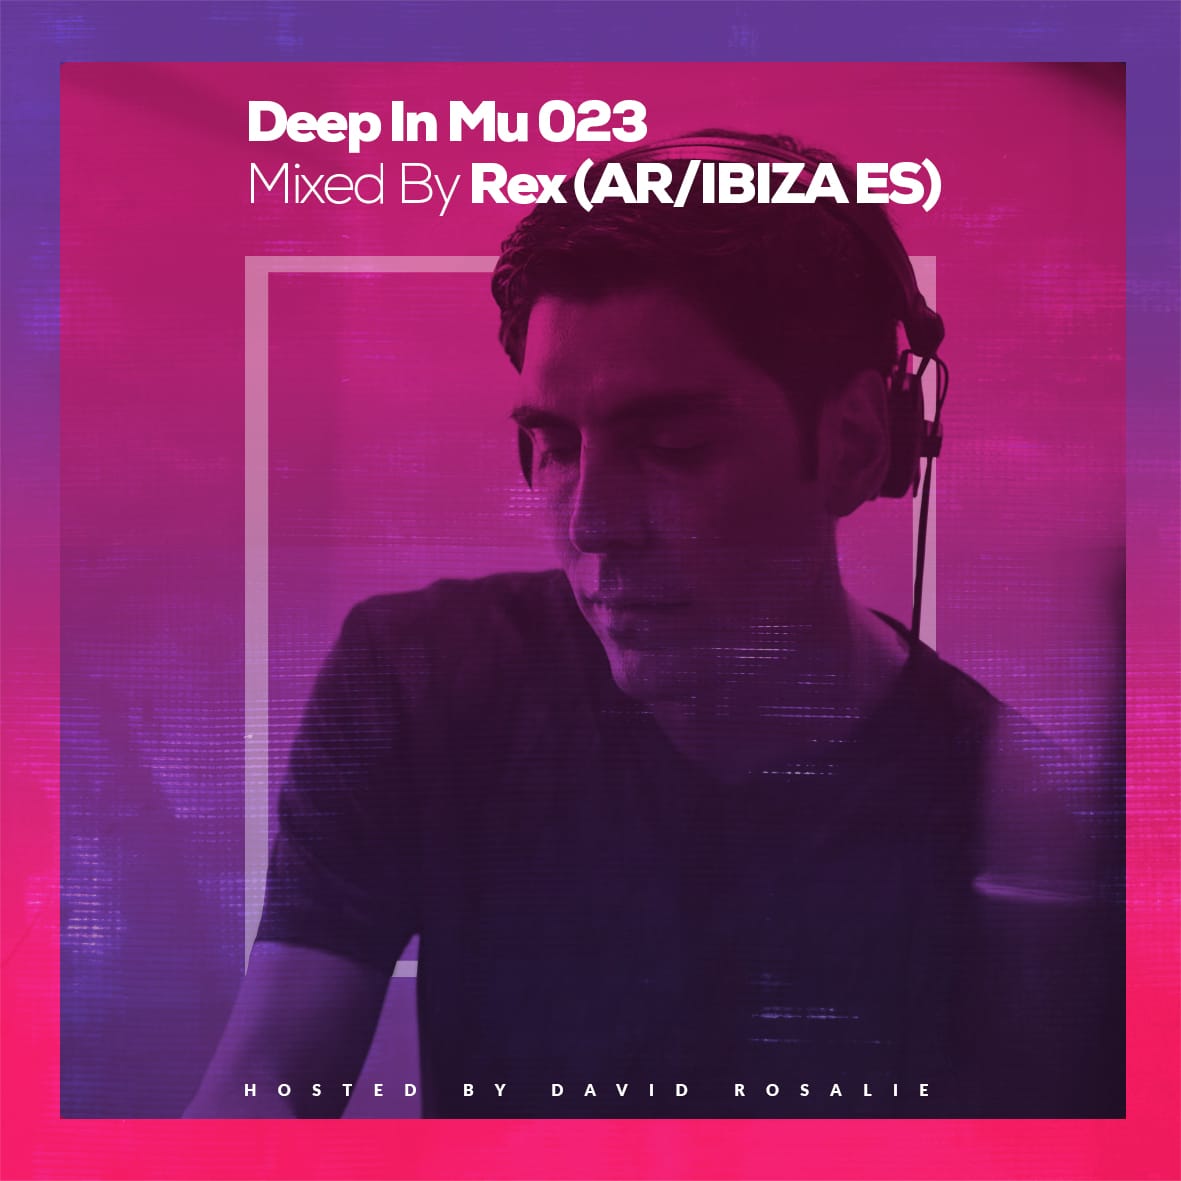 Deep In Mu 023 Mixed By Rex (AR/Ibiza ES)